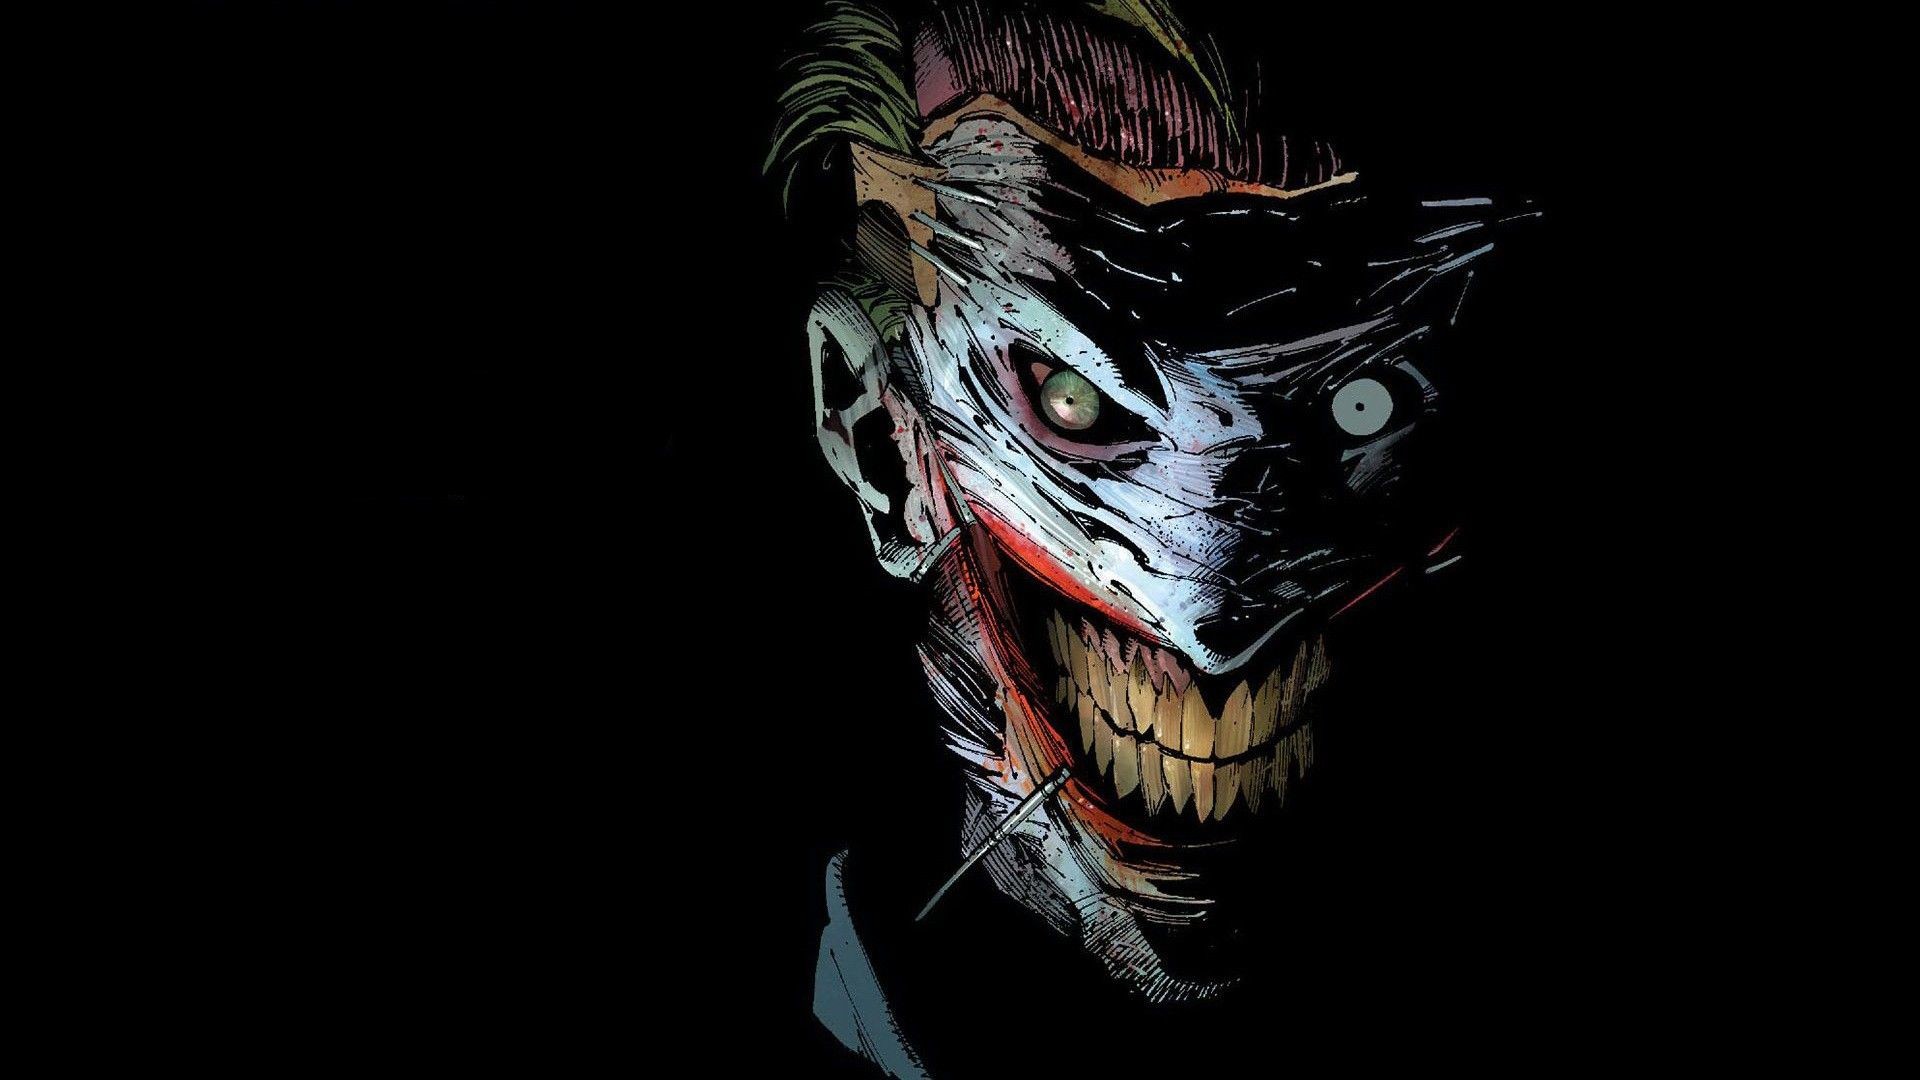 Scary Desktop Hd Wallpaper, Scary Images - Joker Death Of The Family - HD Wallpaper 